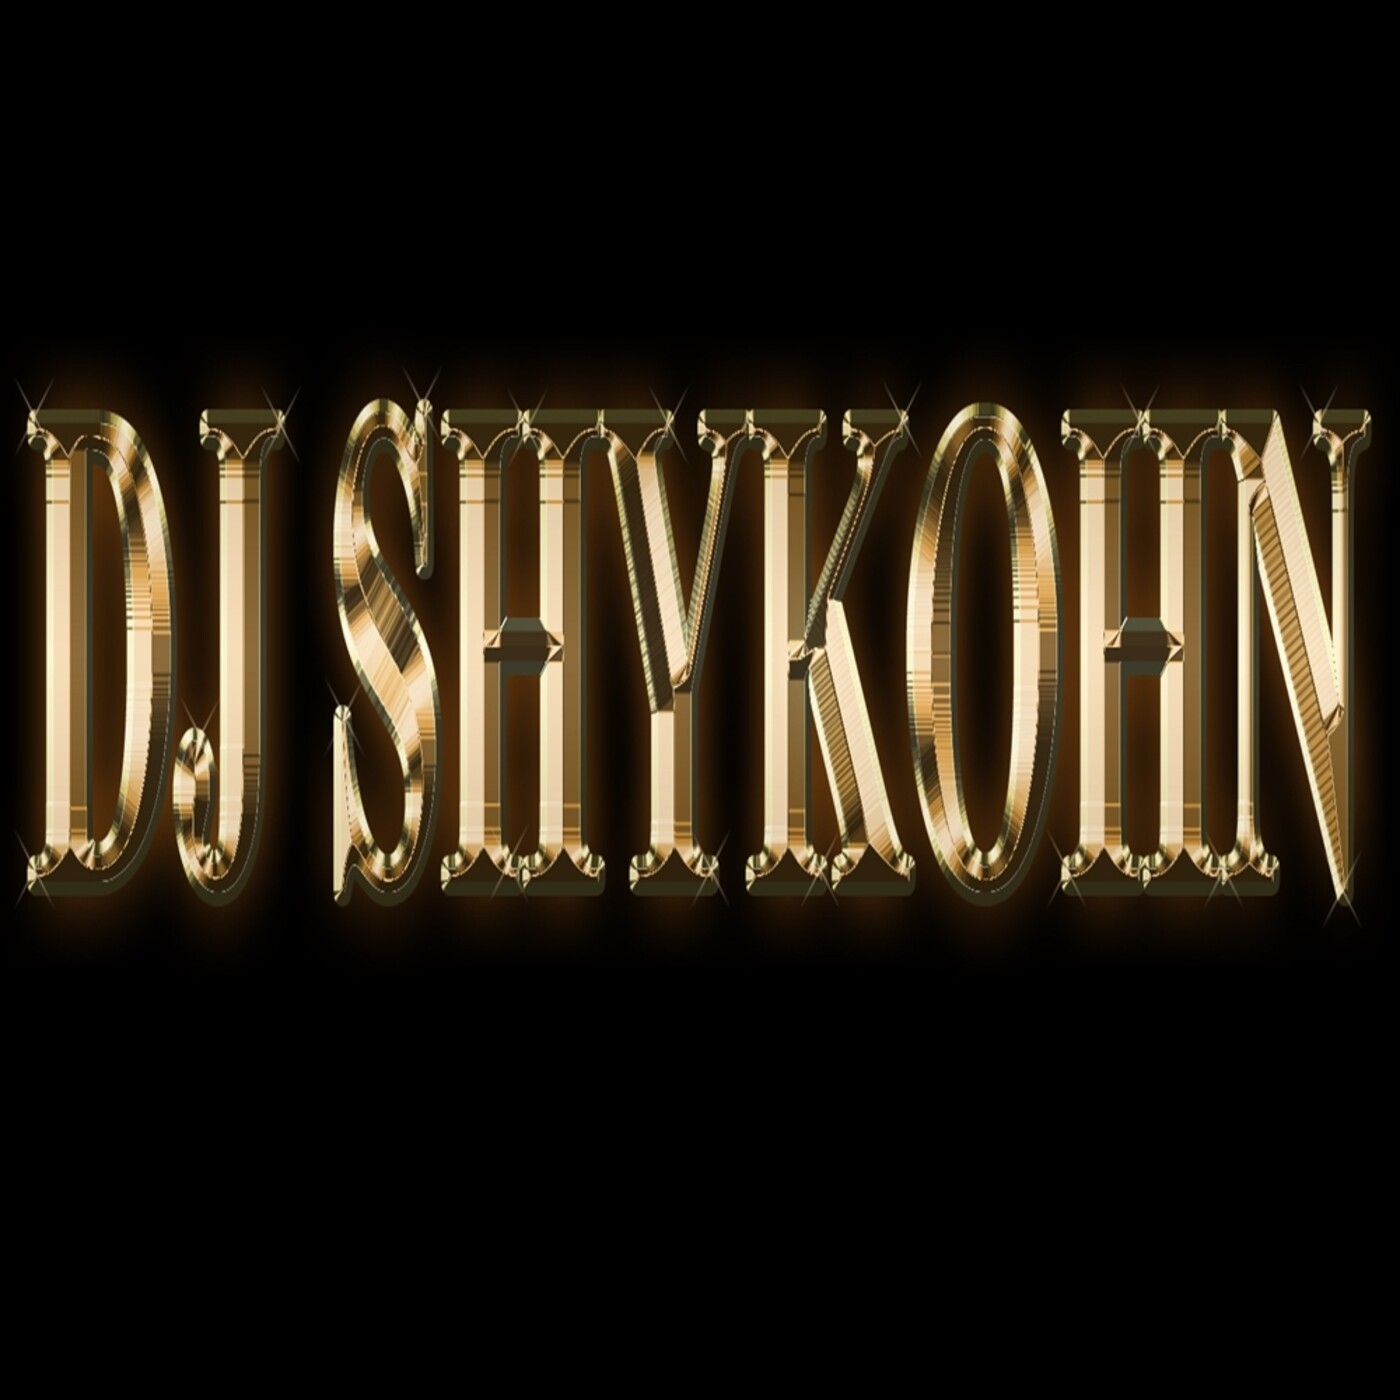 Remix reggaeton nuevo 5 - dj shykohn